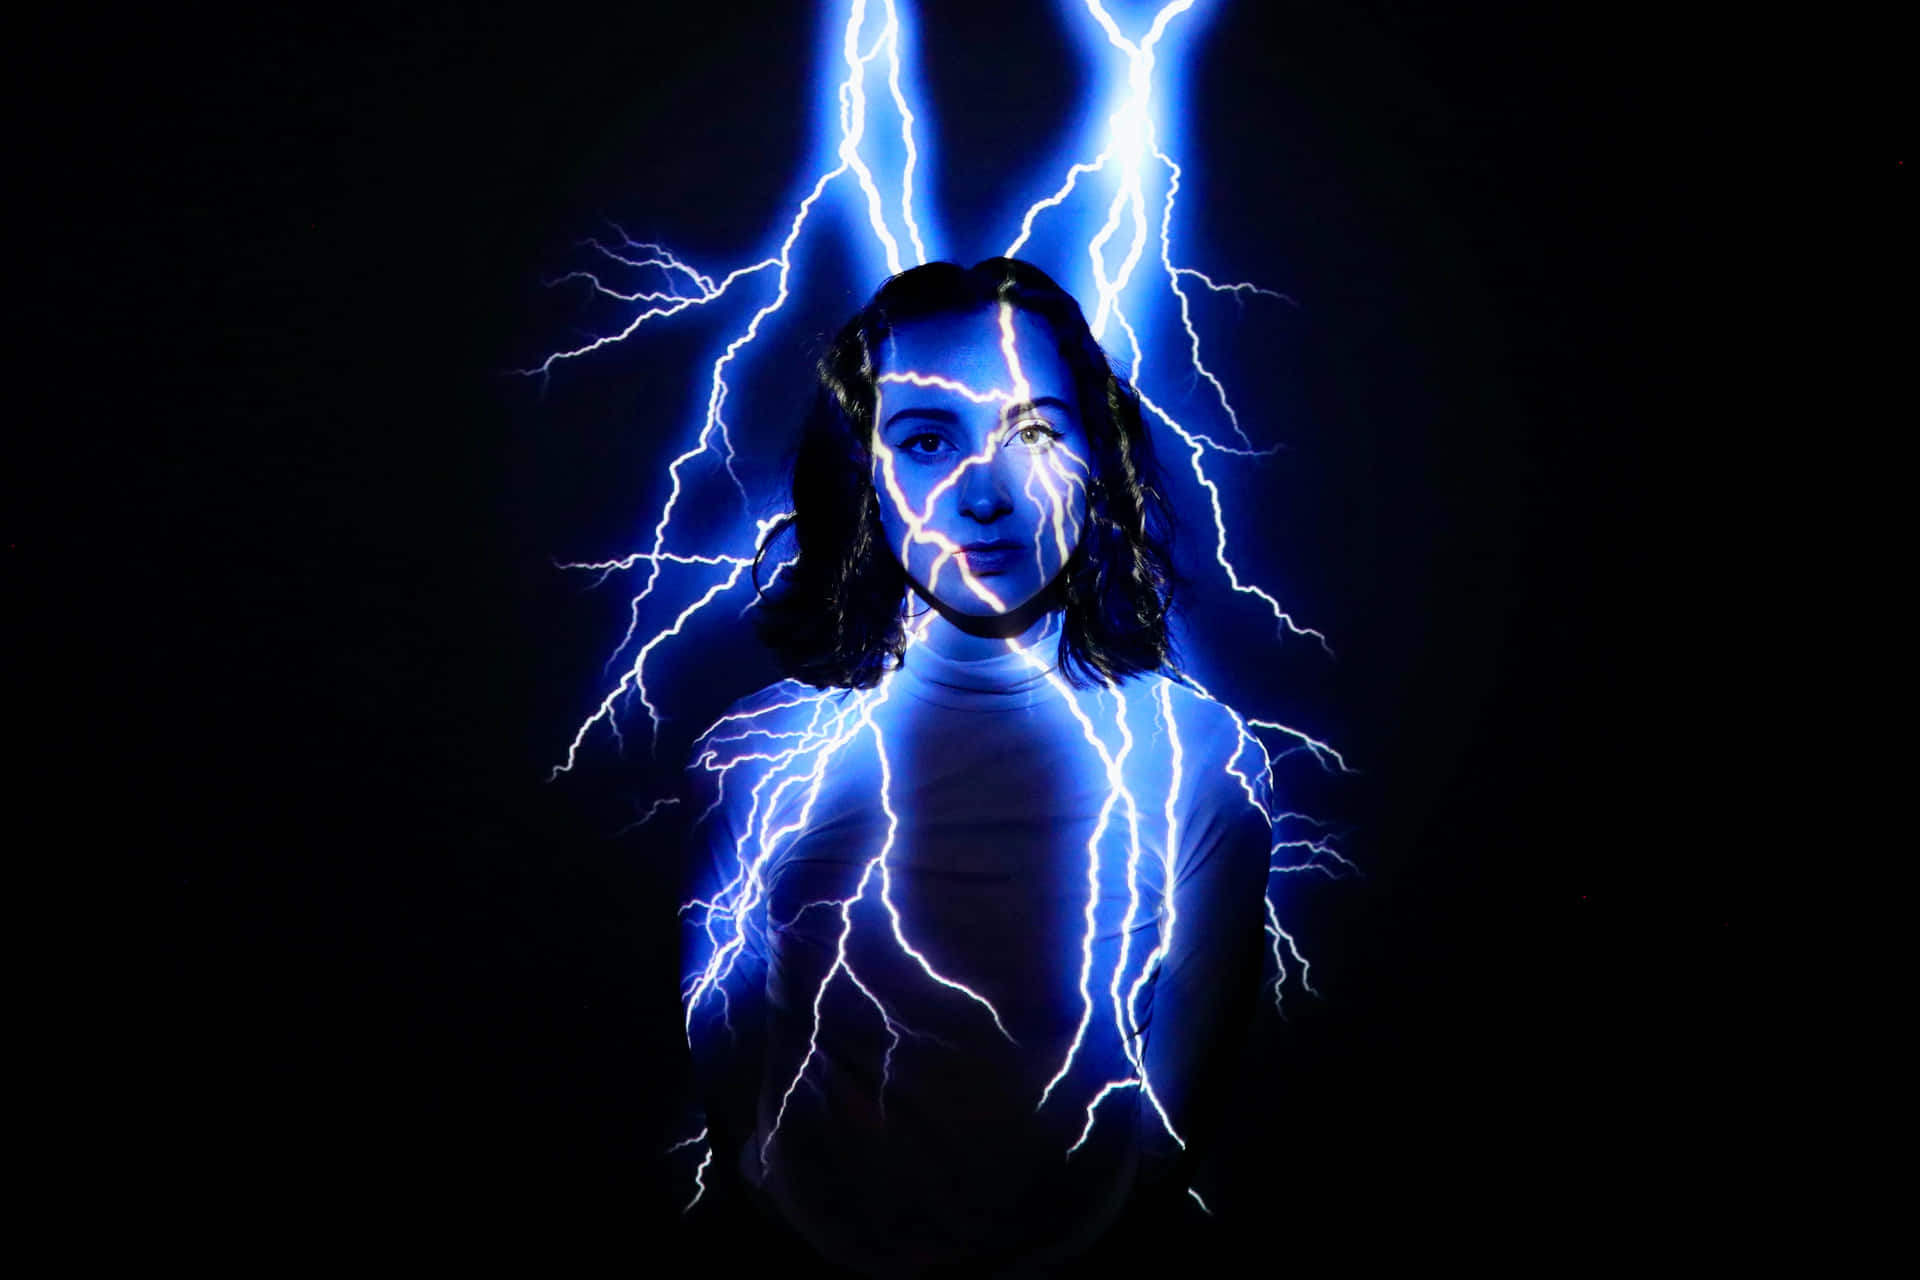 The Powerful Flash Of Blue Lightning